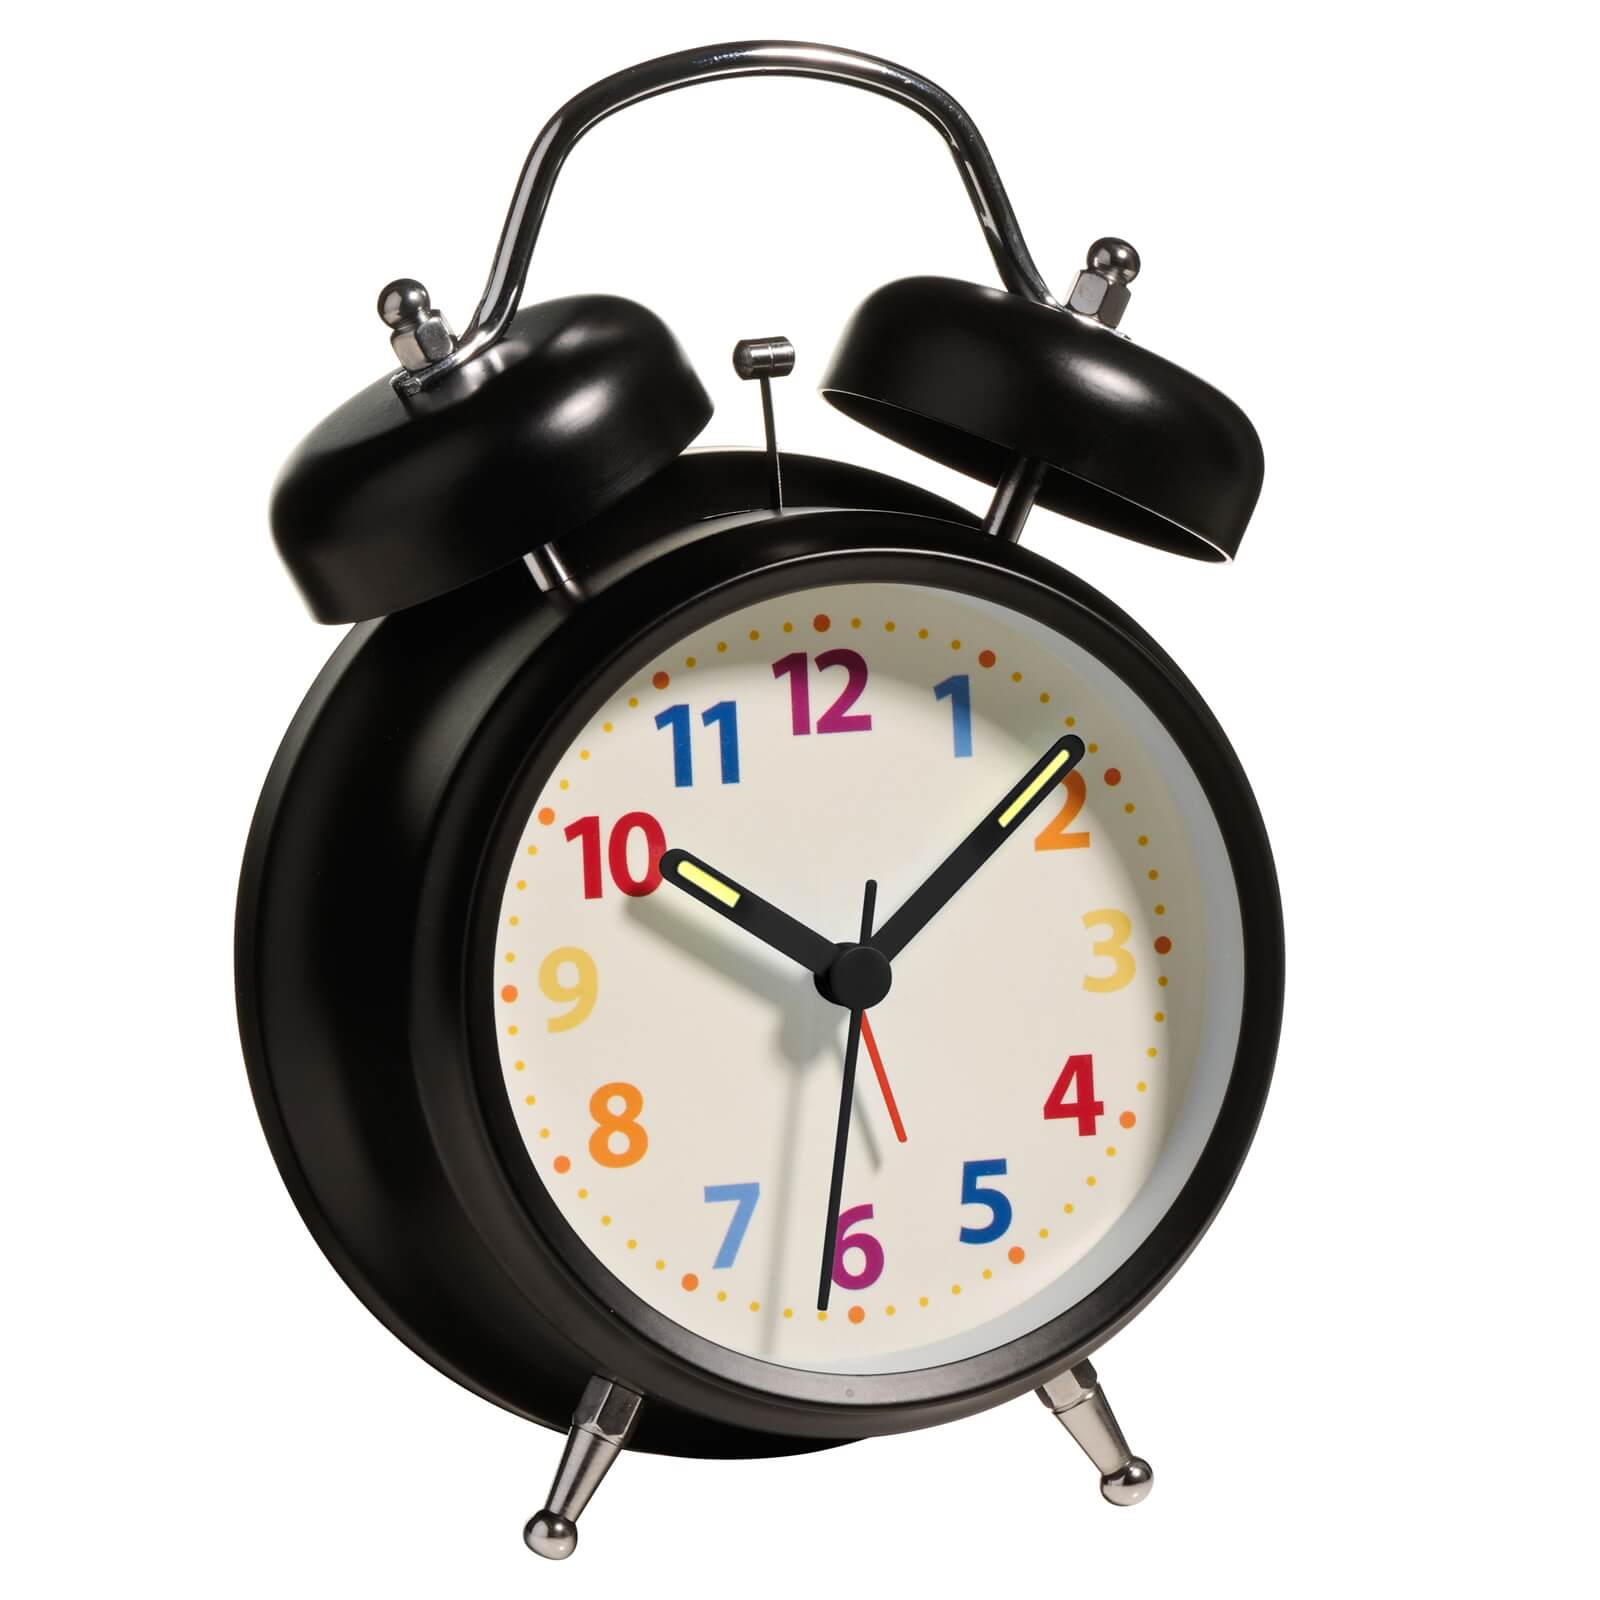 Twin Bell Alarm Clock - Black